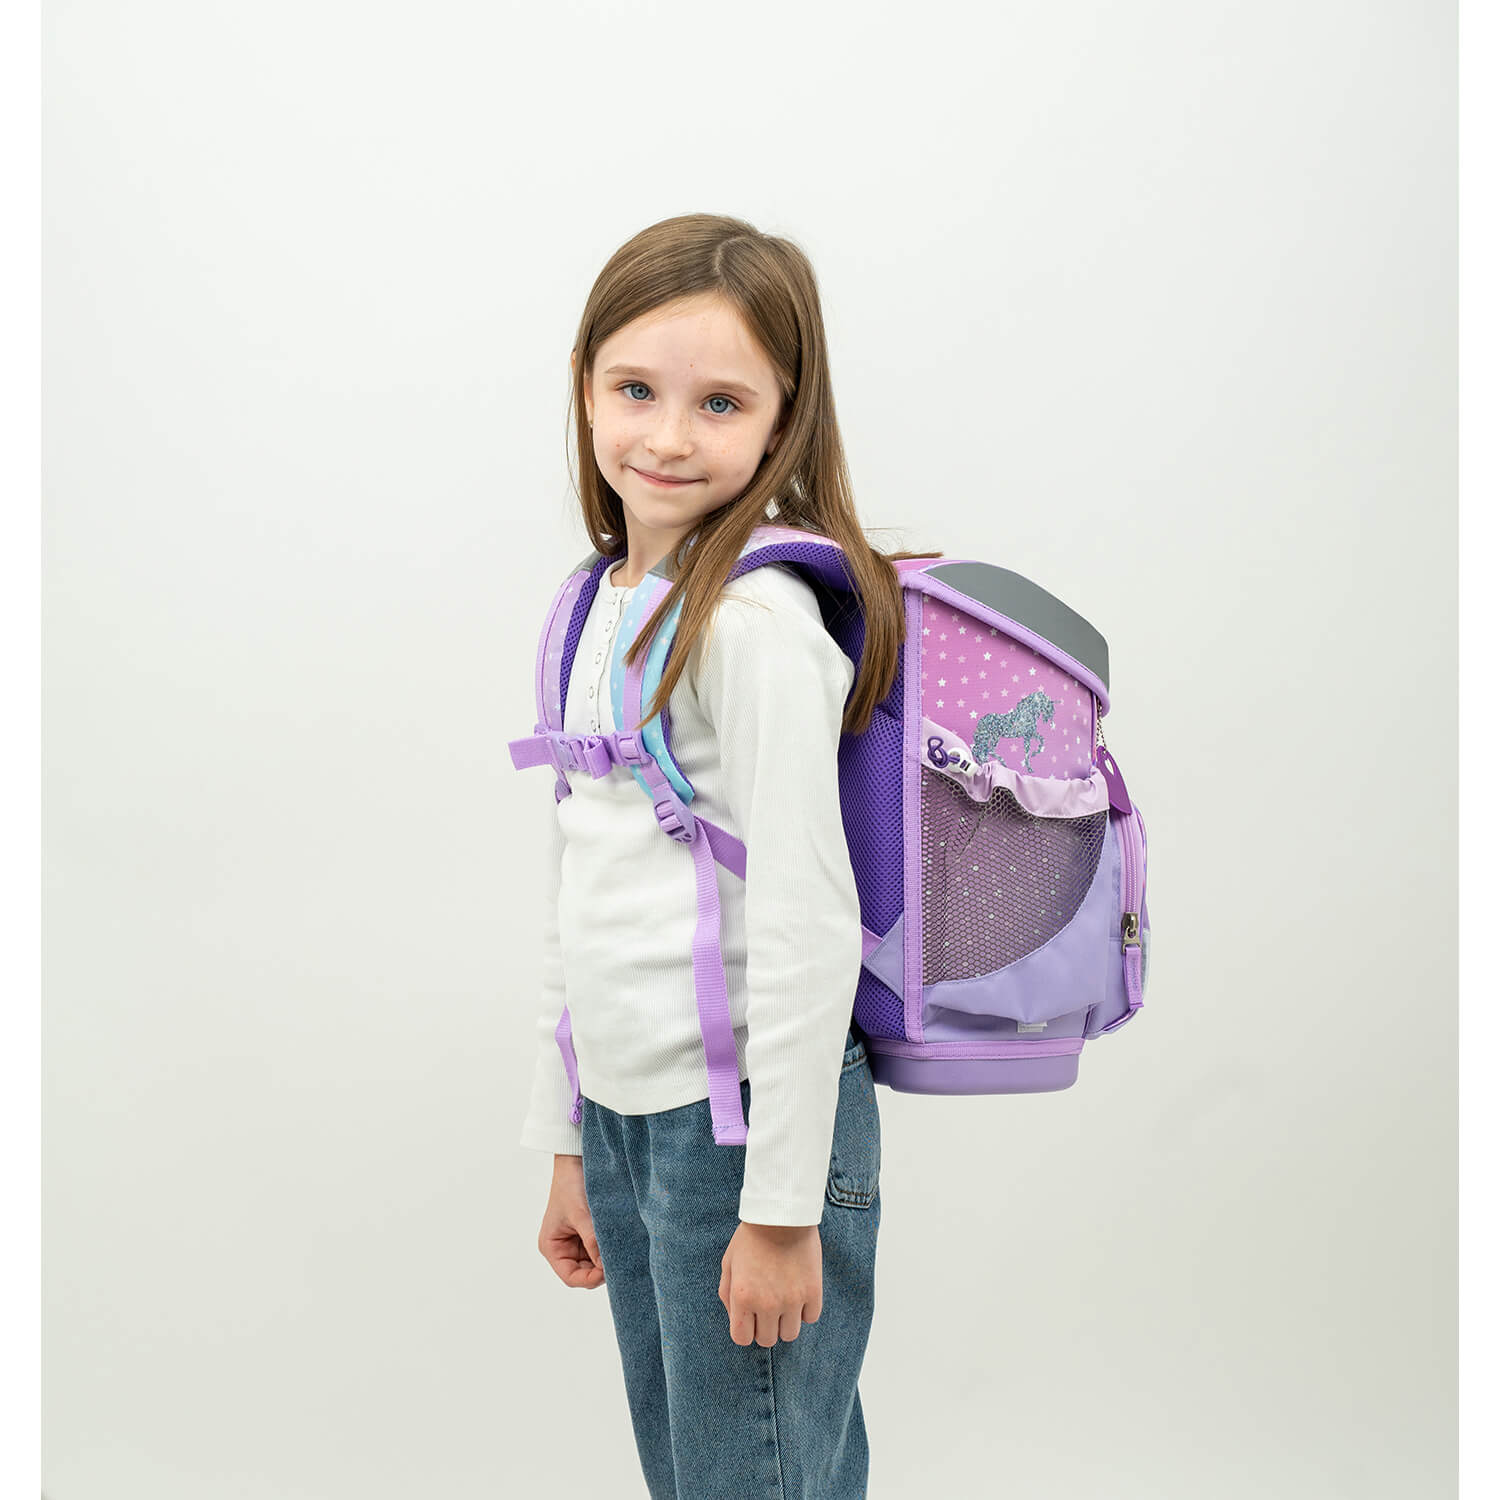 Mini-Fit Rainbow Unicorn schoolbag set 4 pcs